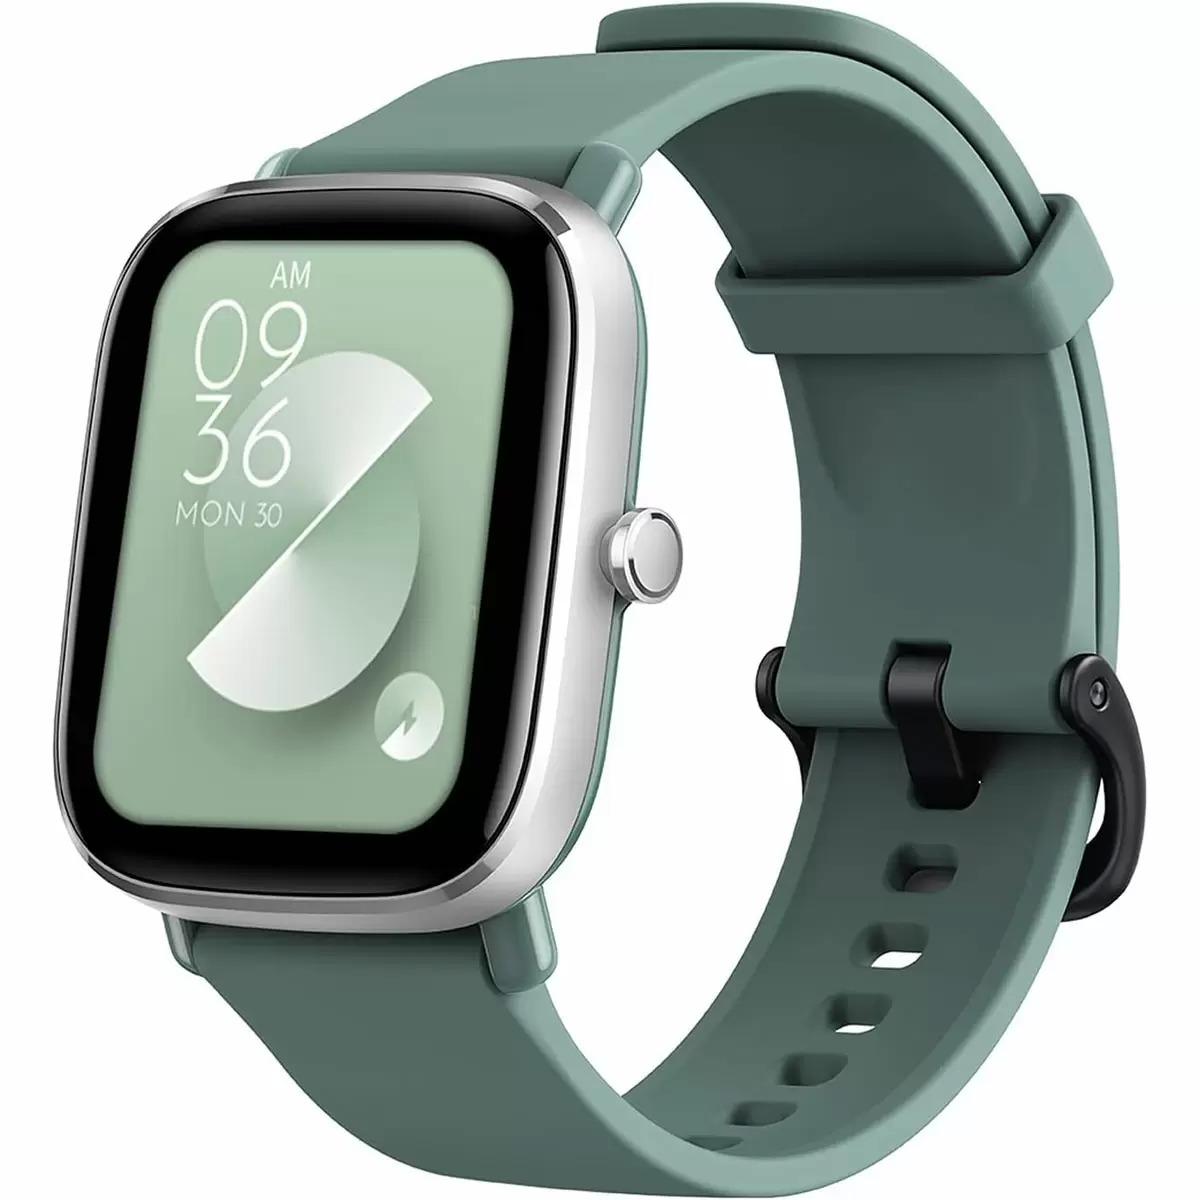 Amazfit GTS 2 Mini Smart Watch for $49.99 Shipped